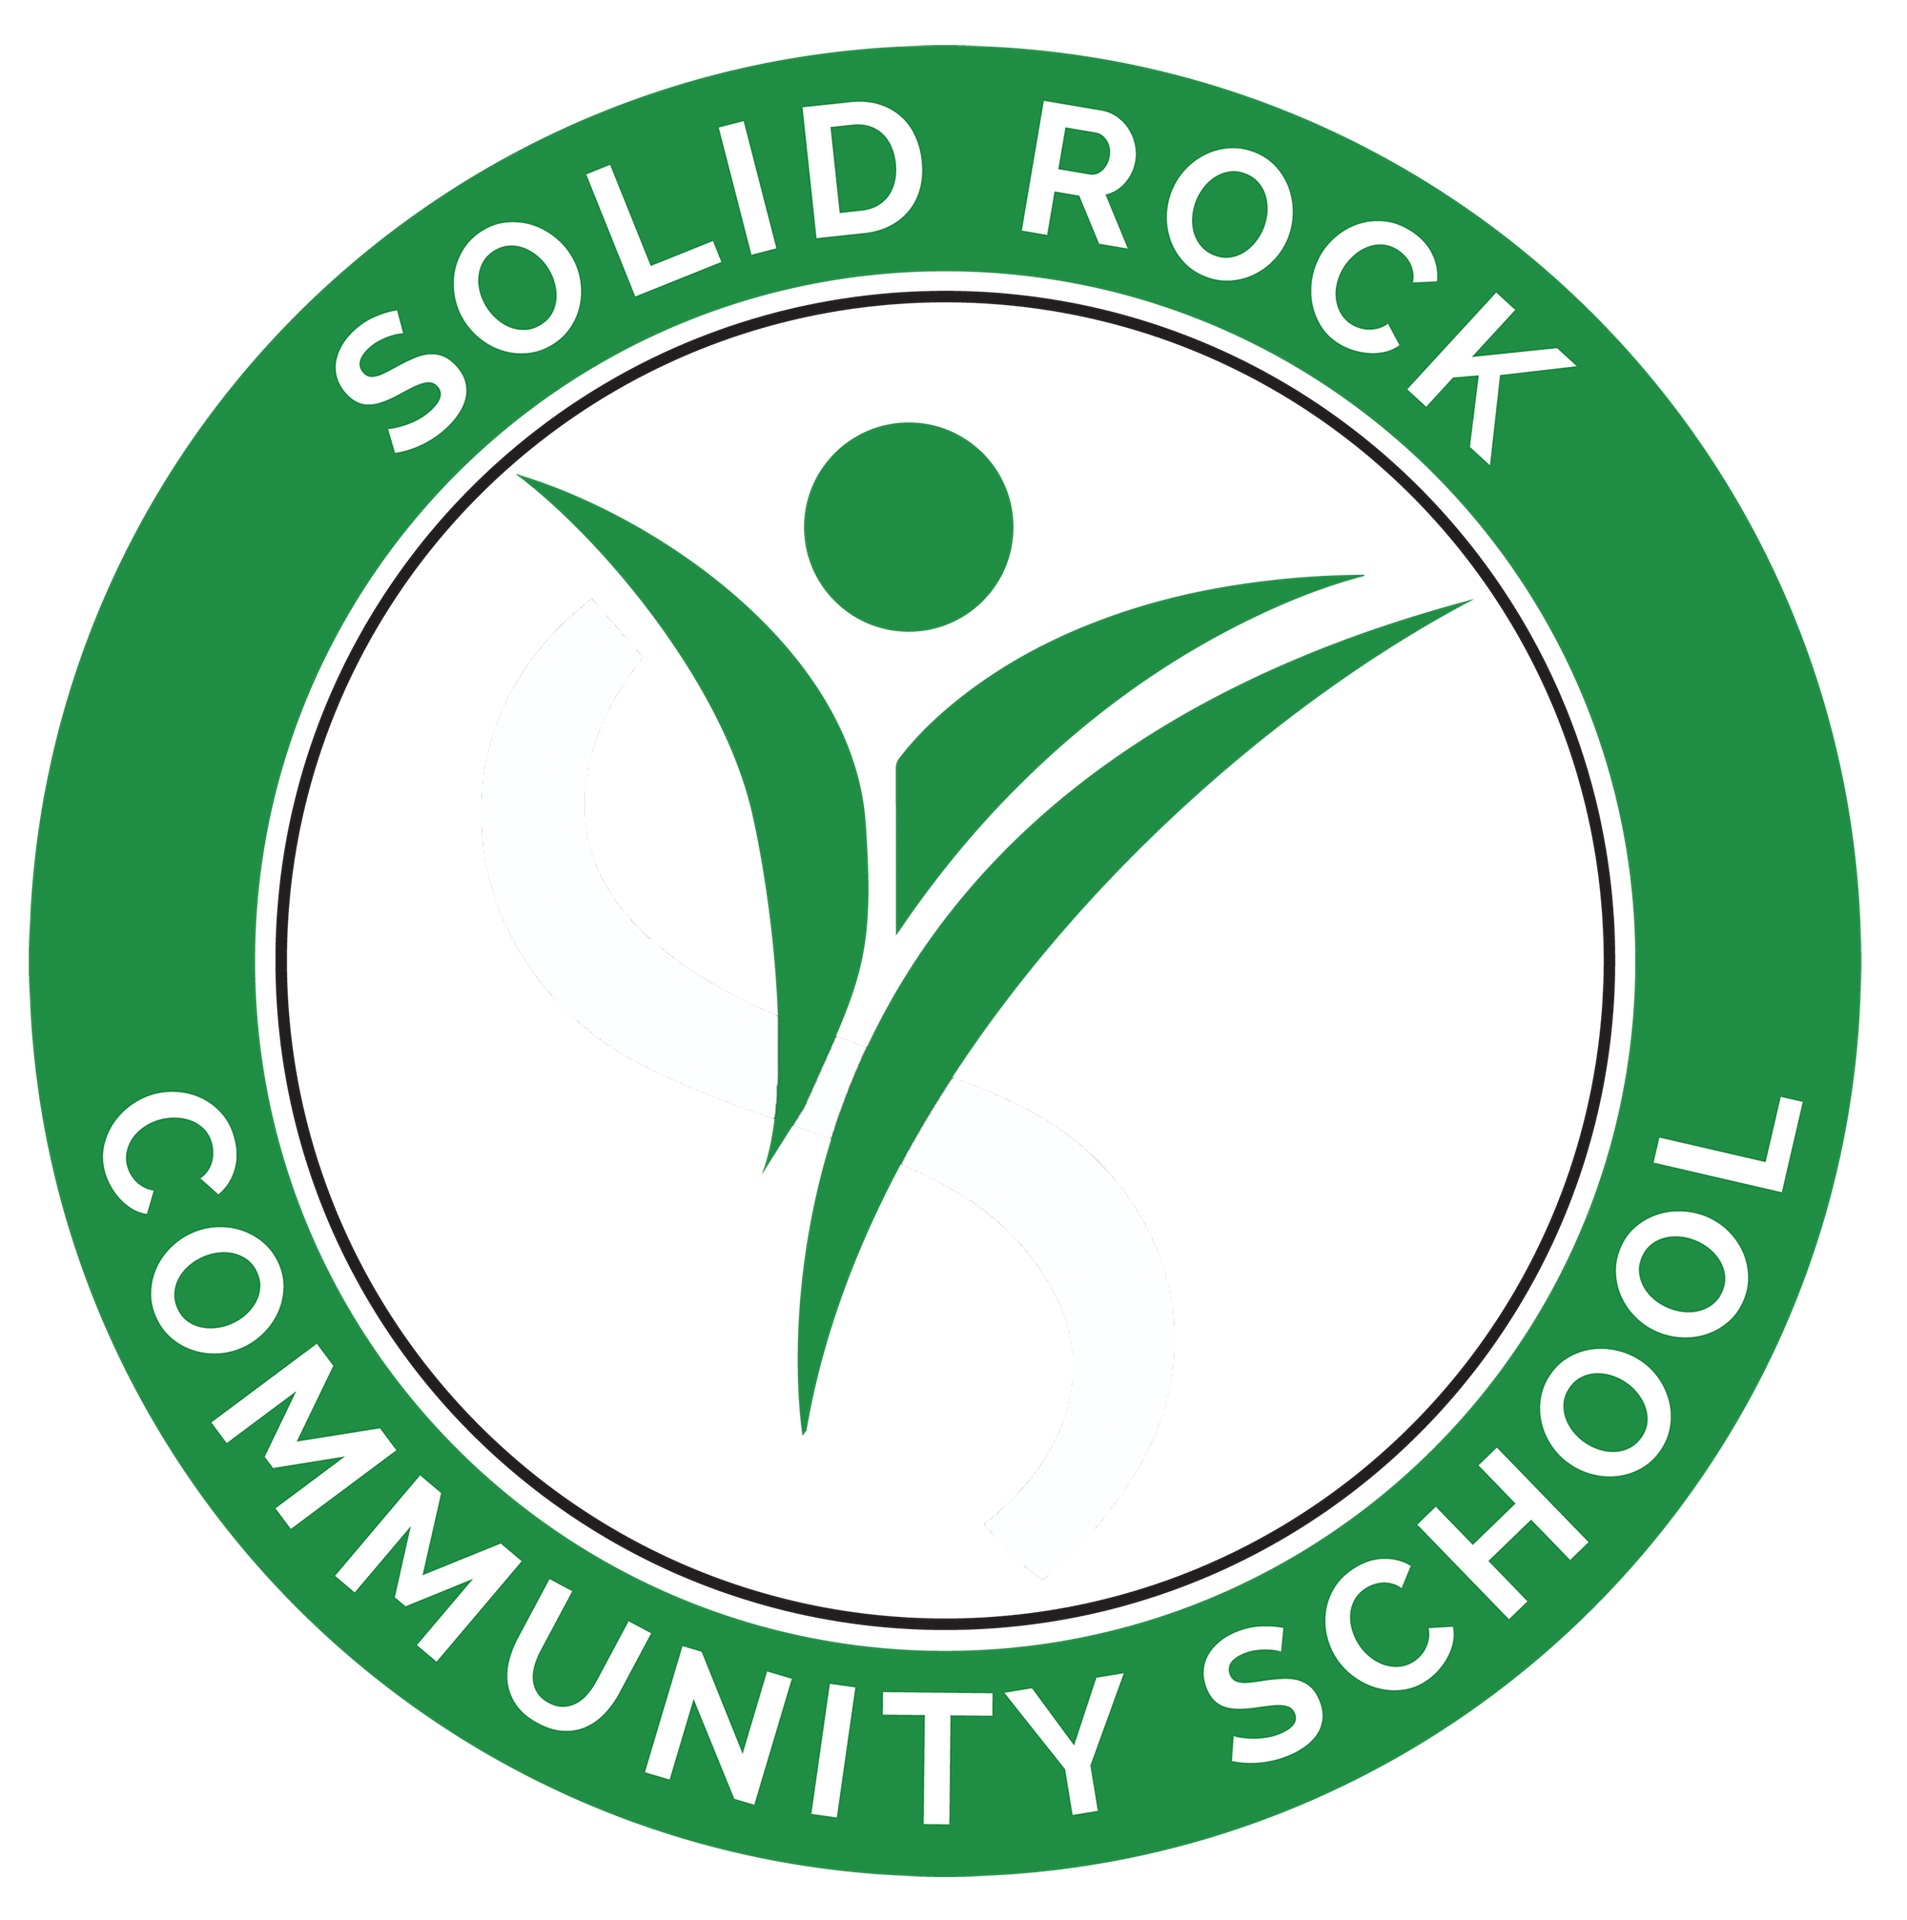 Solid Rock Community School